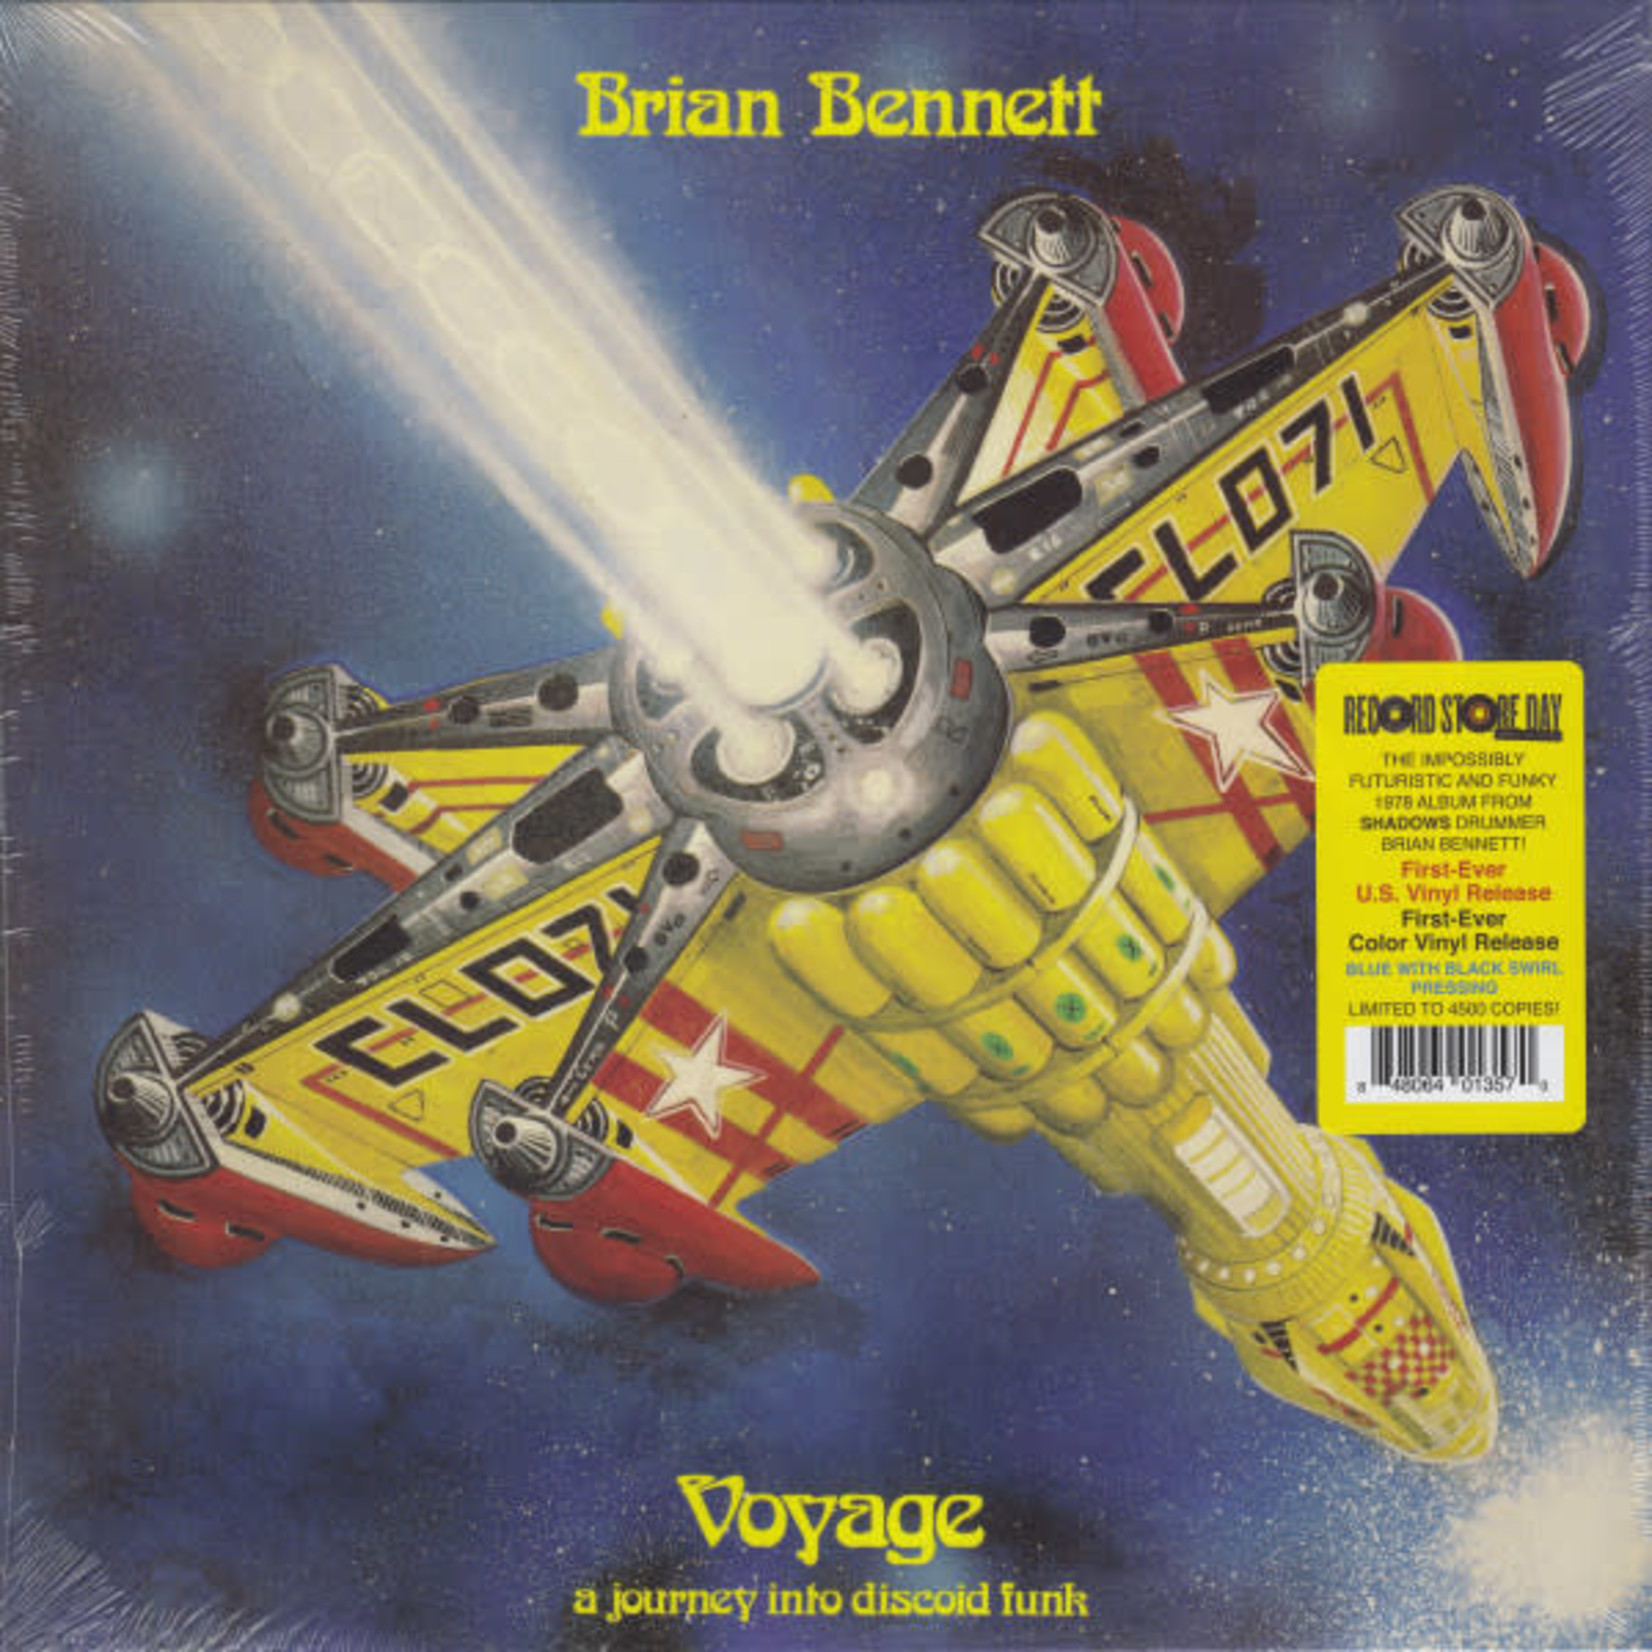 [New] Brian Bennett - Voyage (A Journey Into Discoid Funk) (blue with black swirl vinyl)